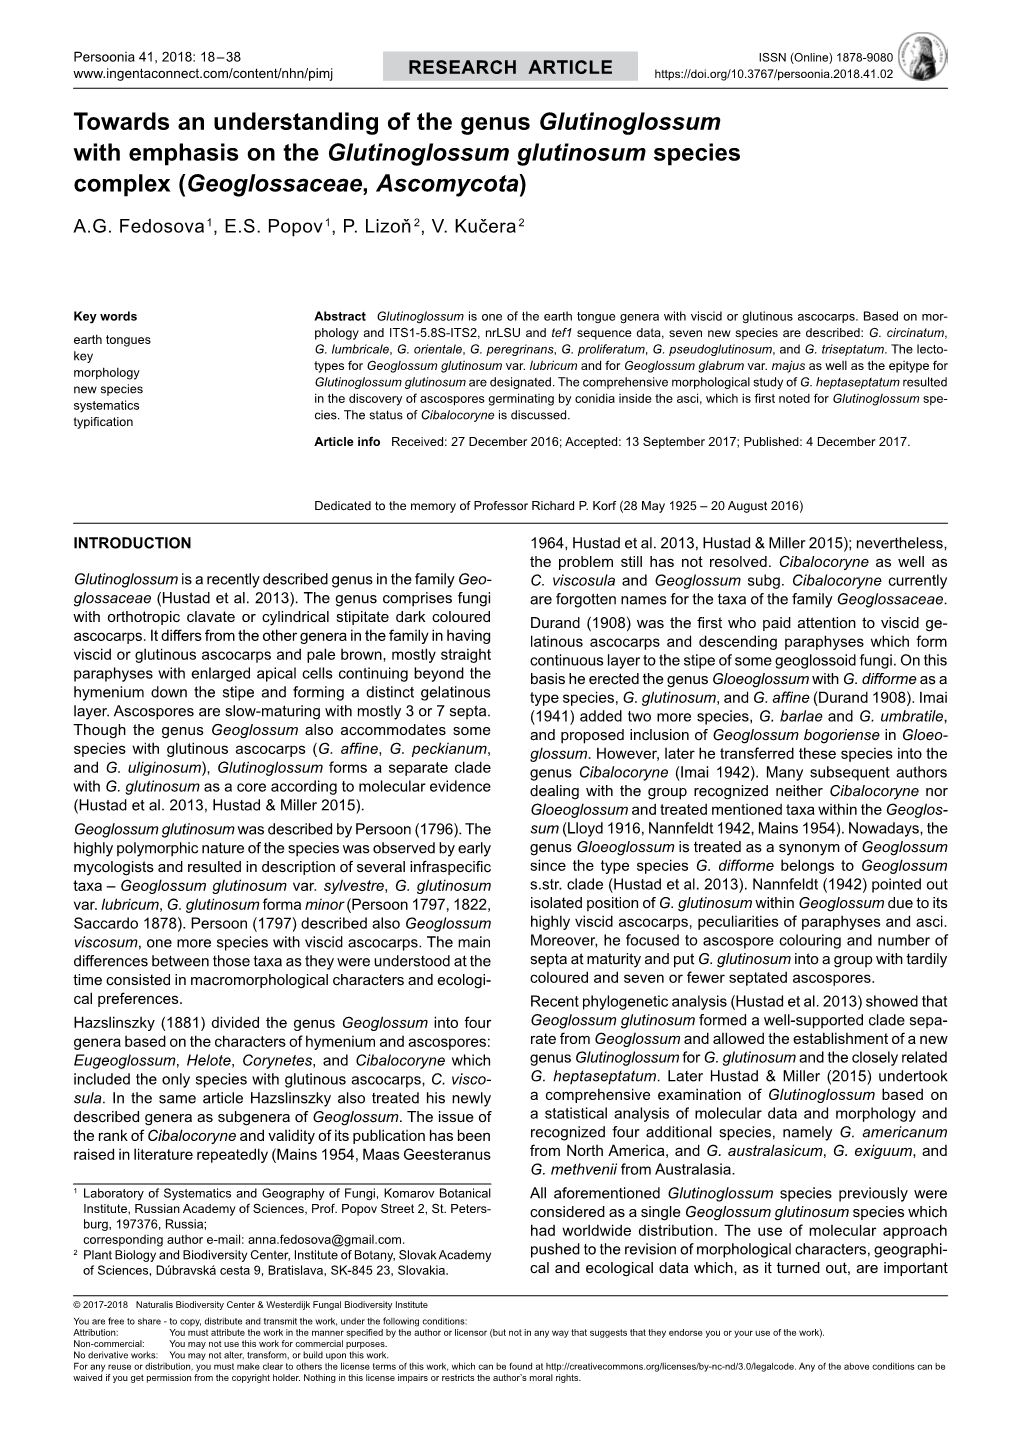 Towards an Understanding of the Genus Glutinoglossum with Emphasis on the Glutinoglossum Glutinosum Species Complex (Geoglossaceae, Ascomycota)